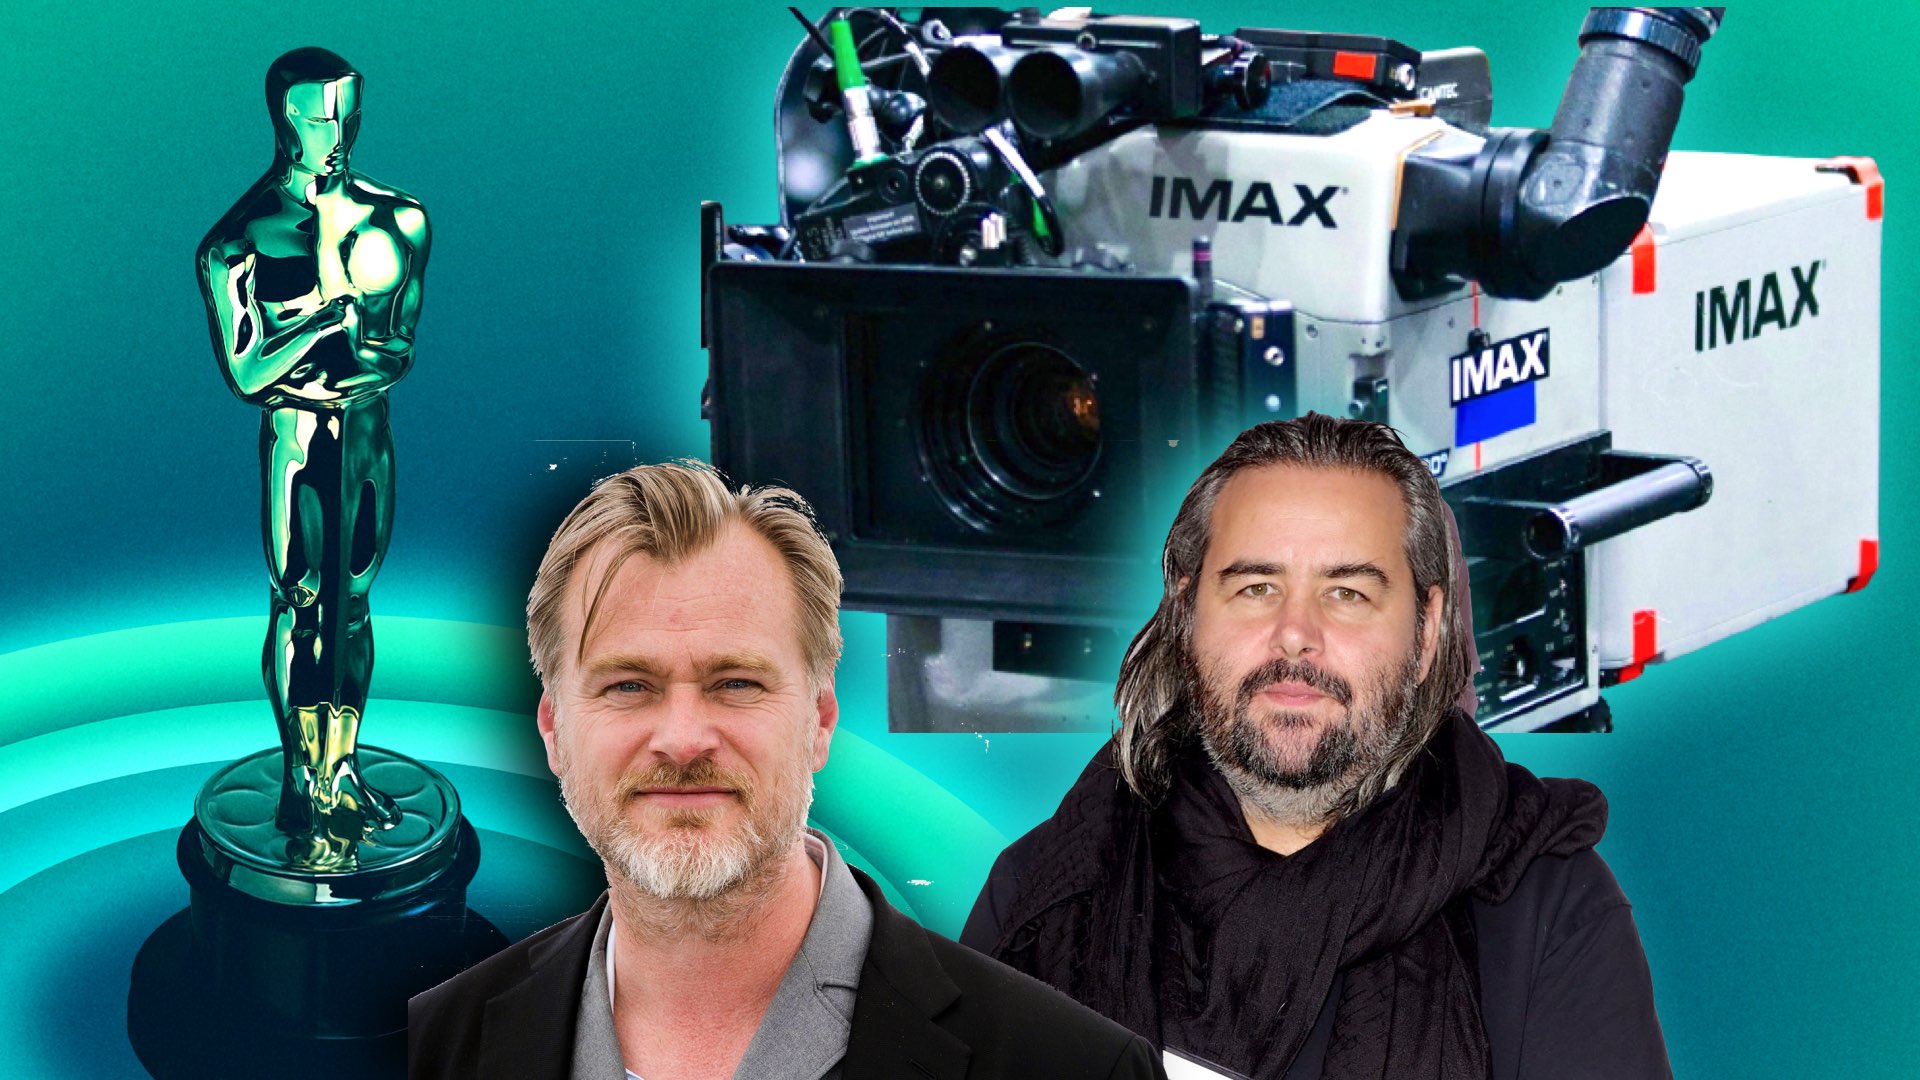 Will IMAX Film Win an Oscar?